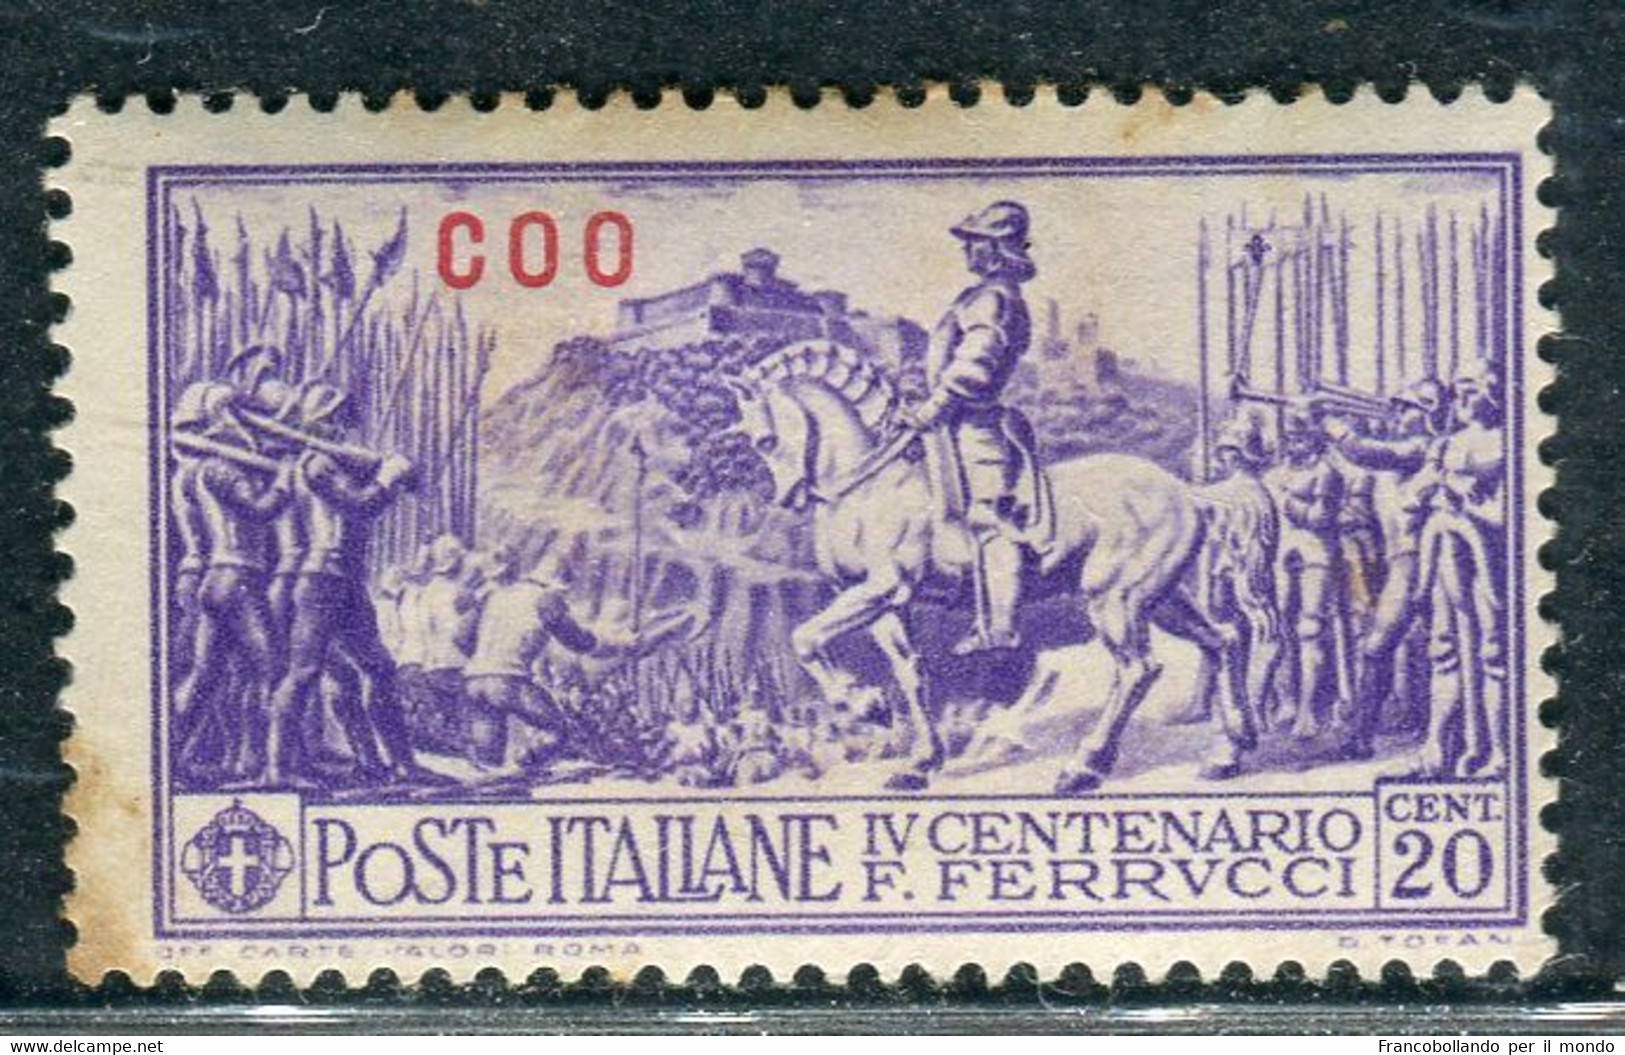 1930 Egeo Isole Coo 20 Cent Serie Ferrucci MH Sassone 12 - Egeo (Coo)